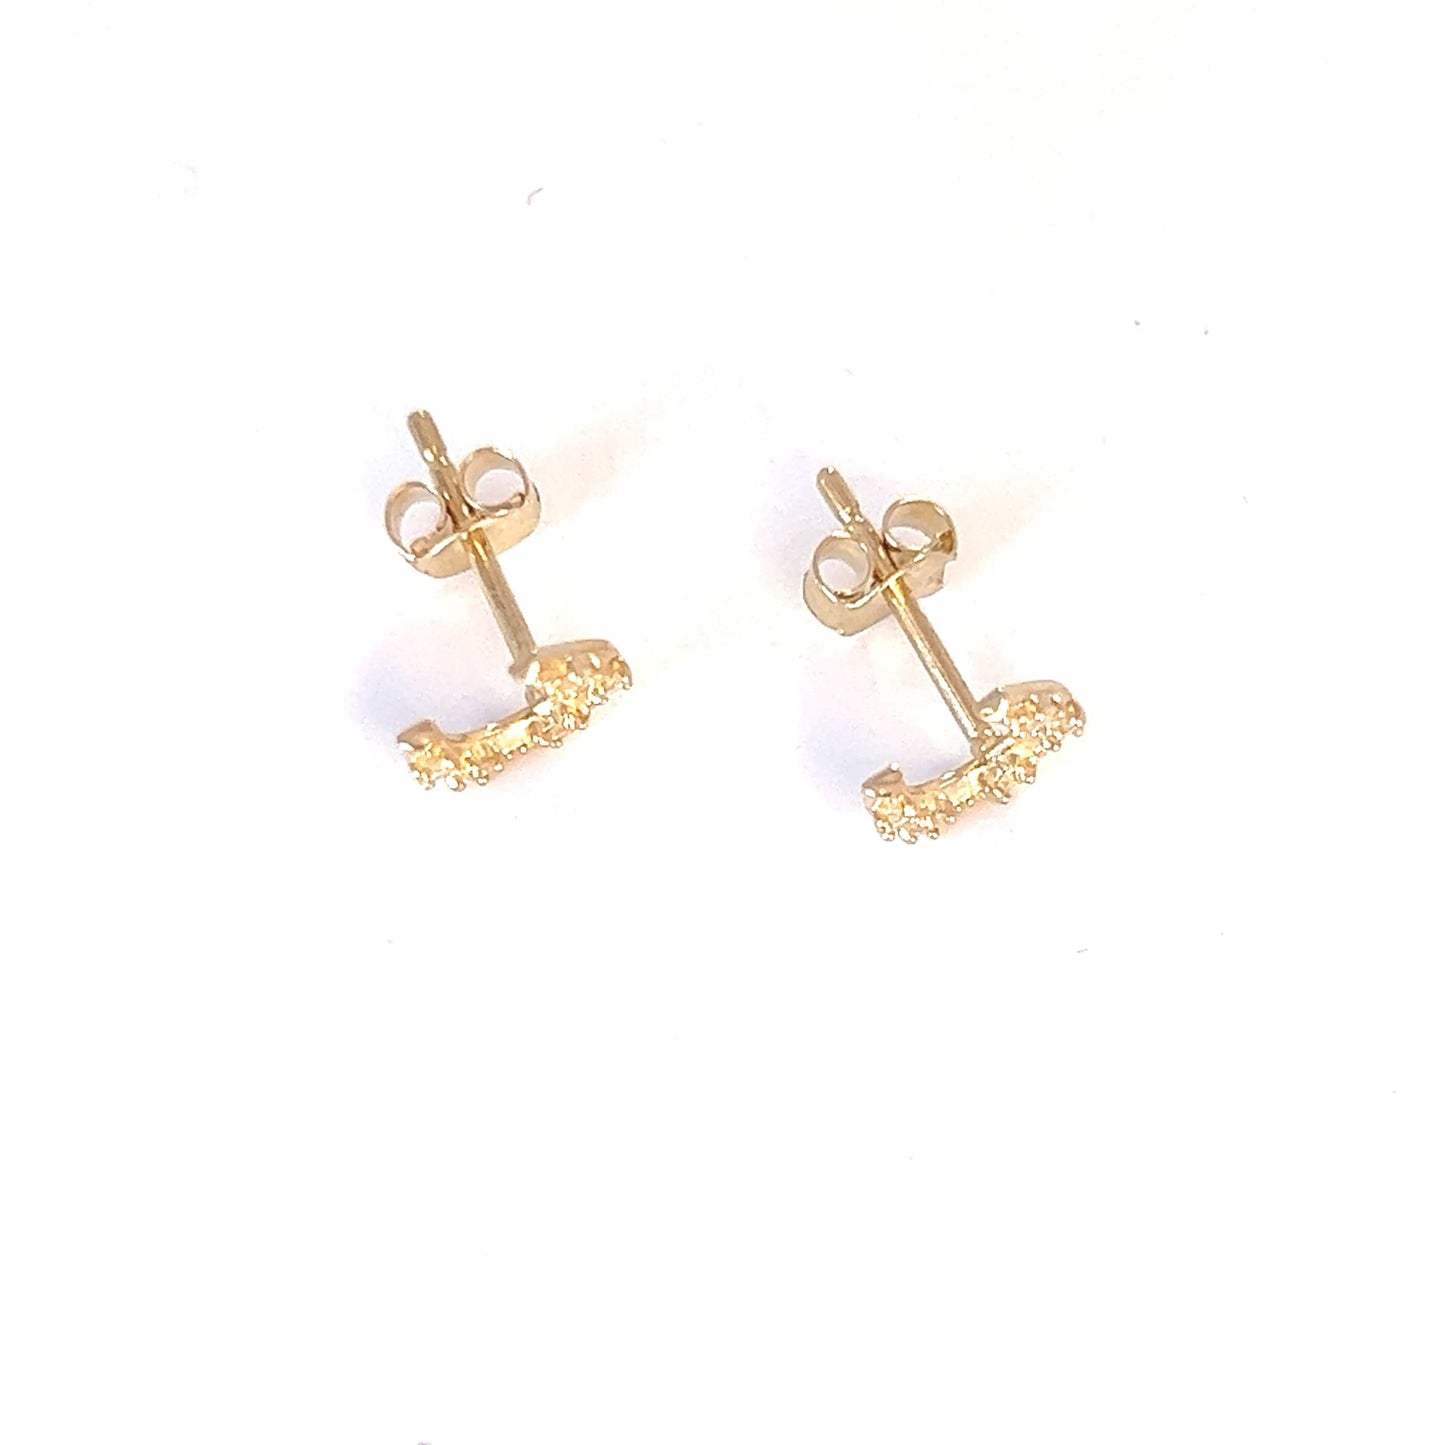 PEGASUS JEWELLERY Earrings 9ct Gold Horseshoe Earrings Sparkle